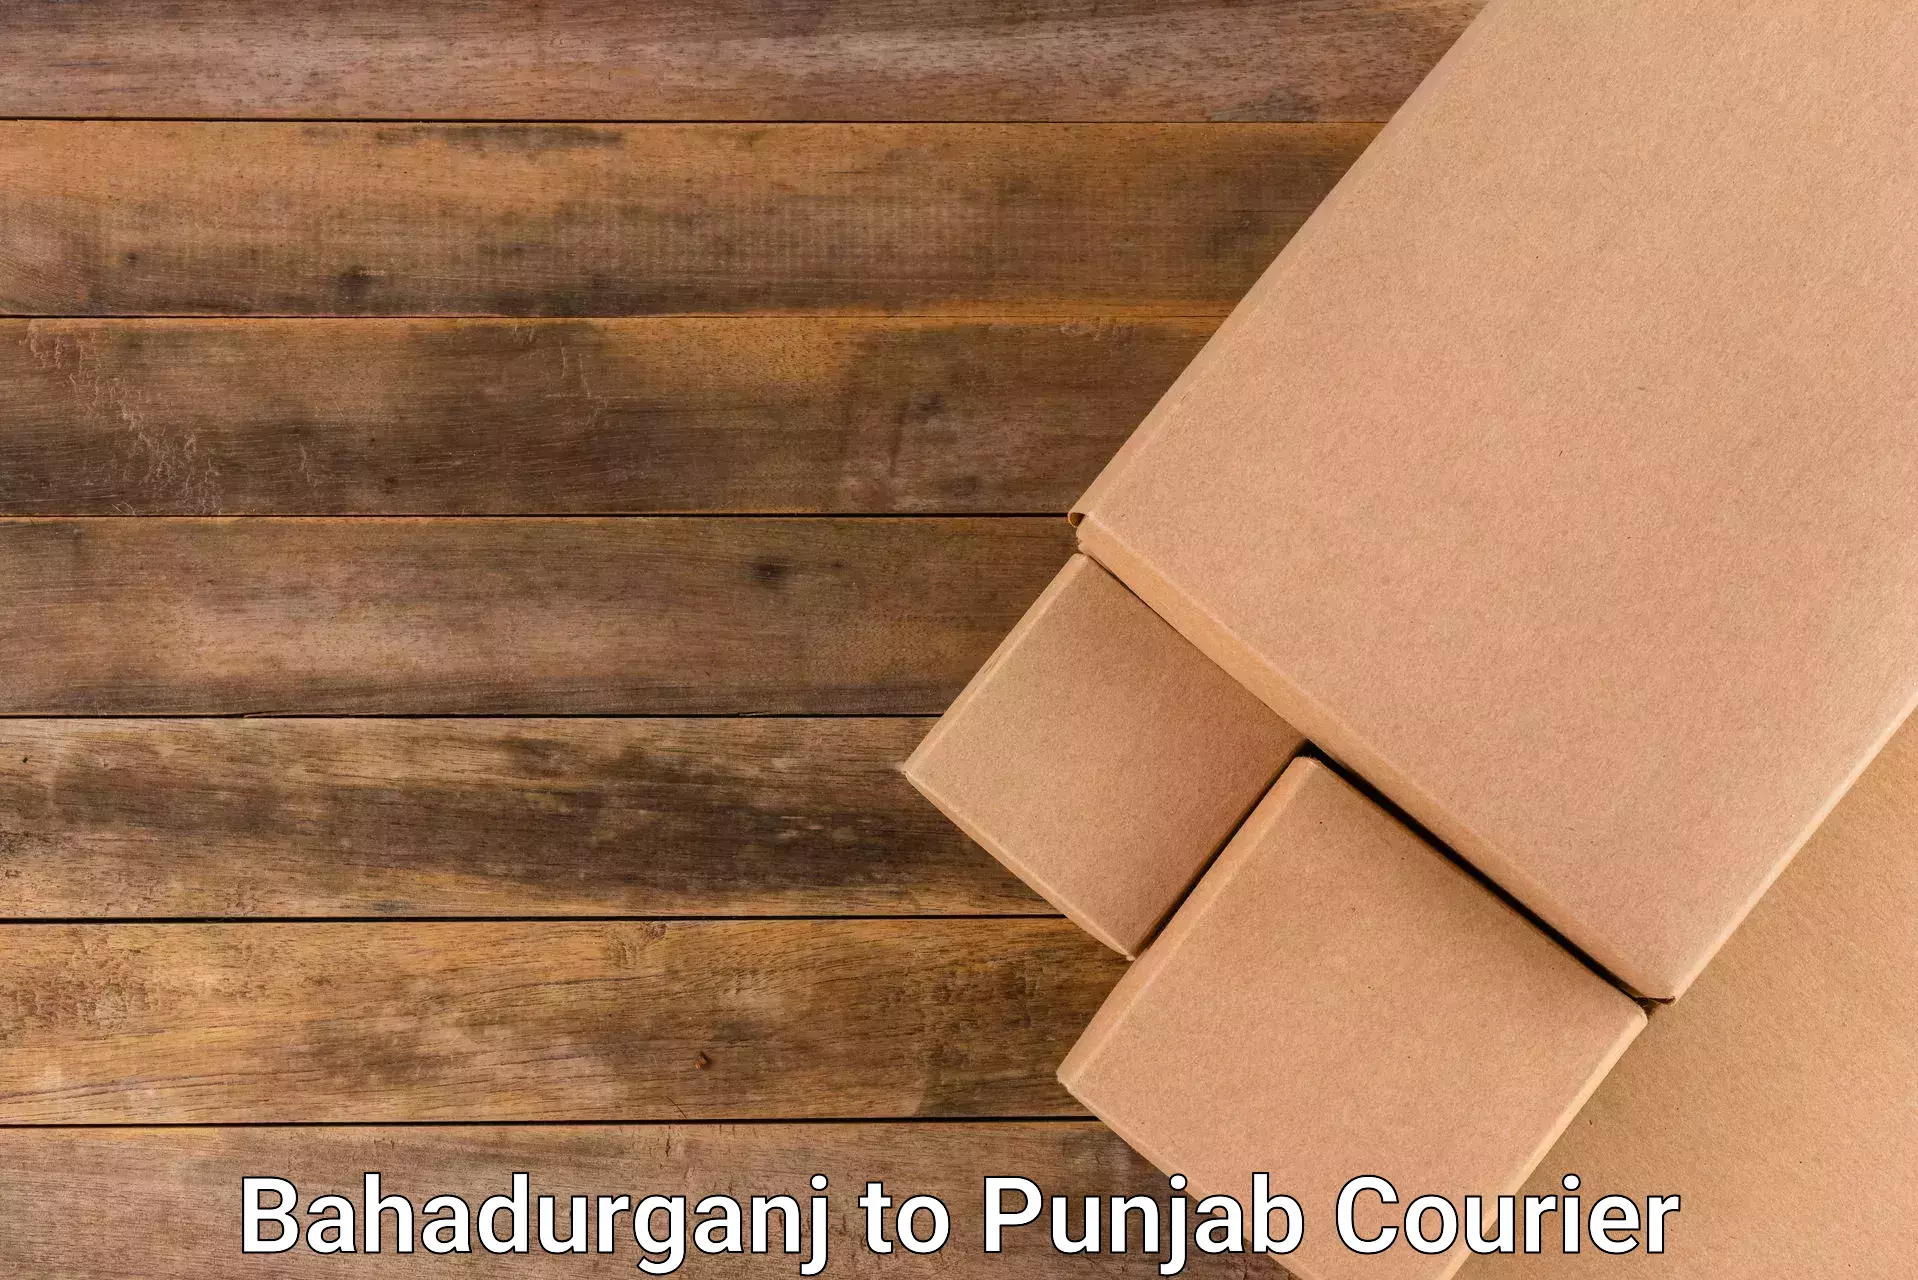 Courier app Bahadurganj to Batala